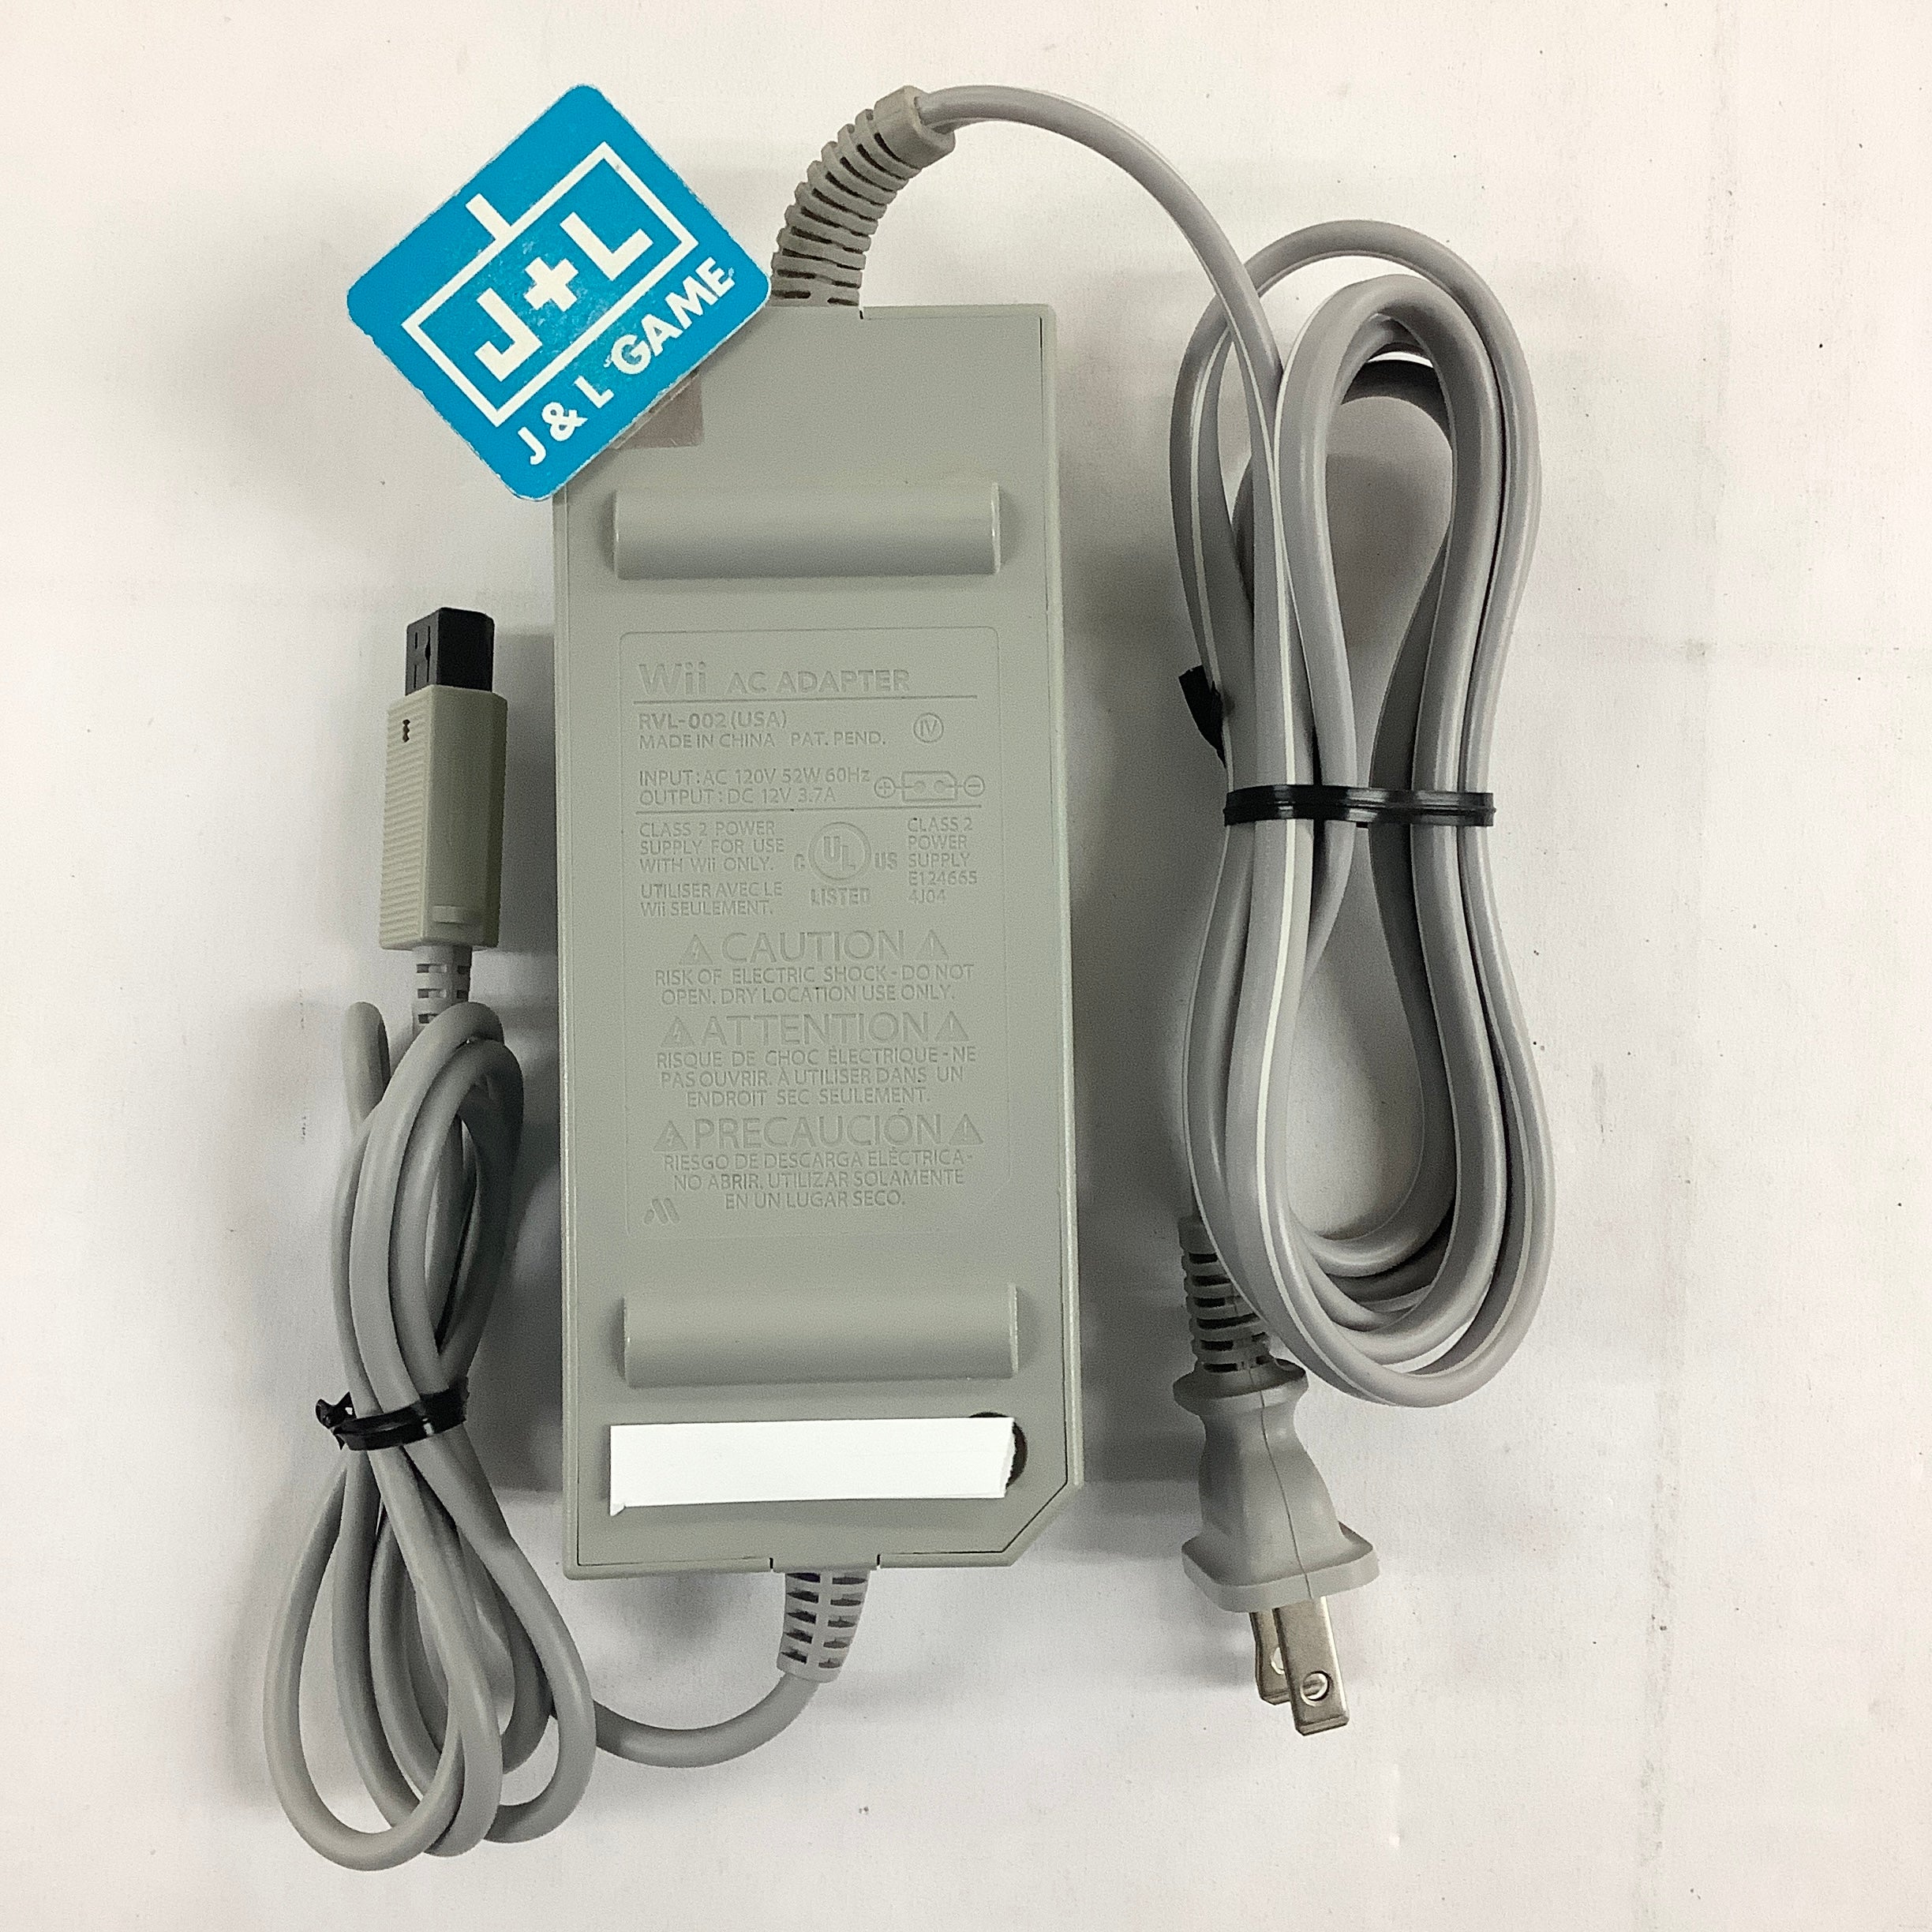 Nintendo Wii AC Adapter (RVL-002 (USA)) - Nintendo Wii [Pre-Owned] Accessories Nintendo   